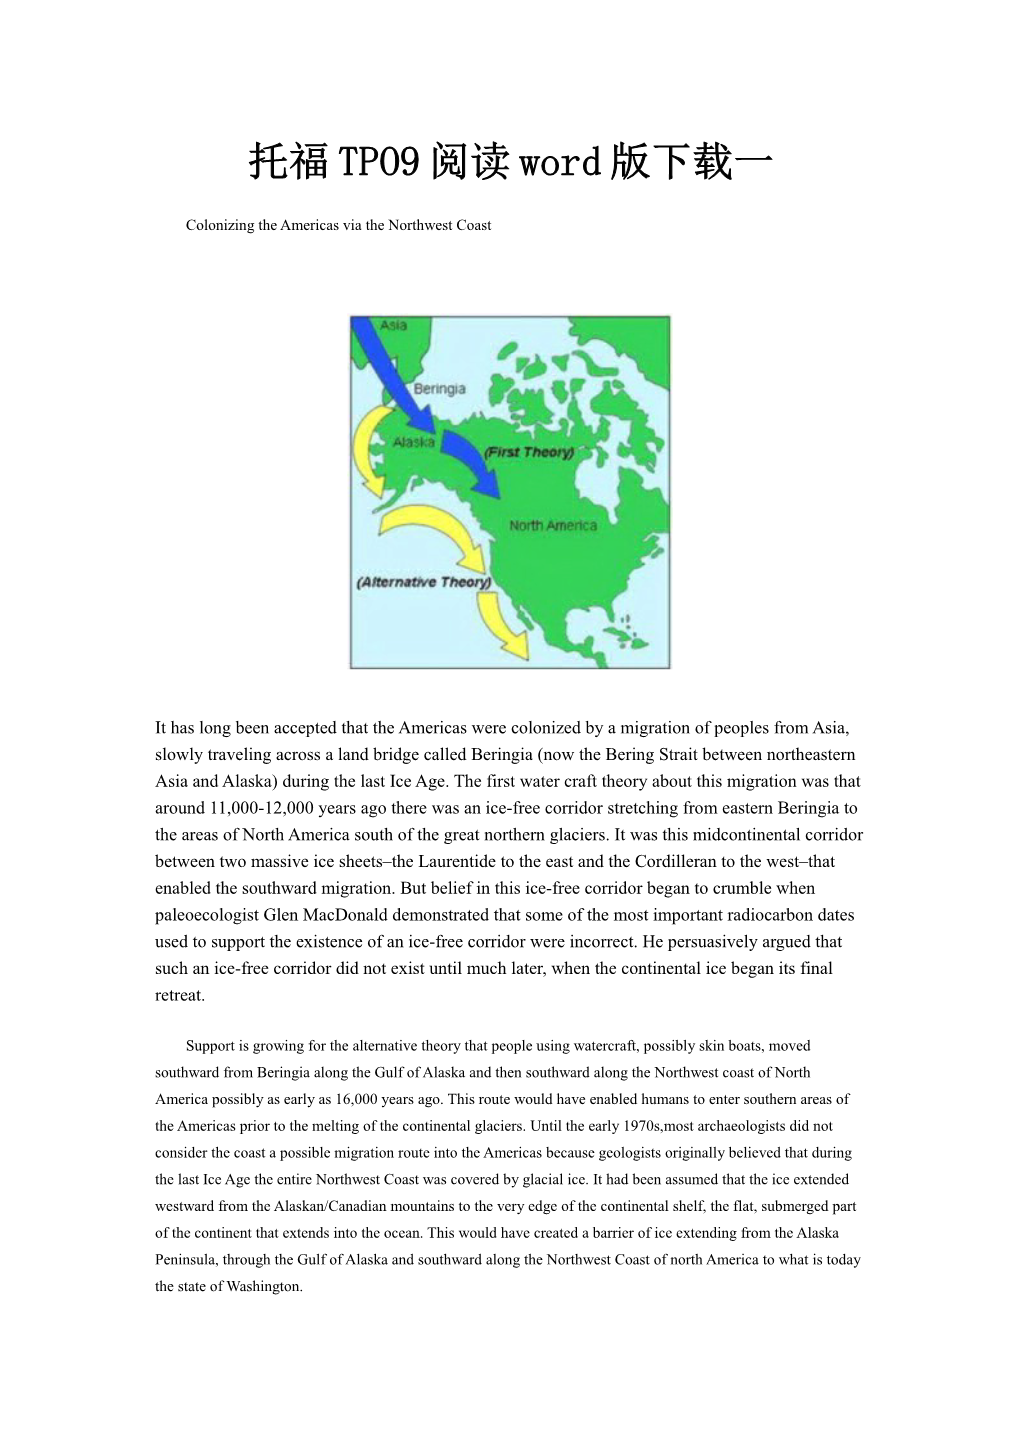 Colonizing the Americas Via the Northwest Coast